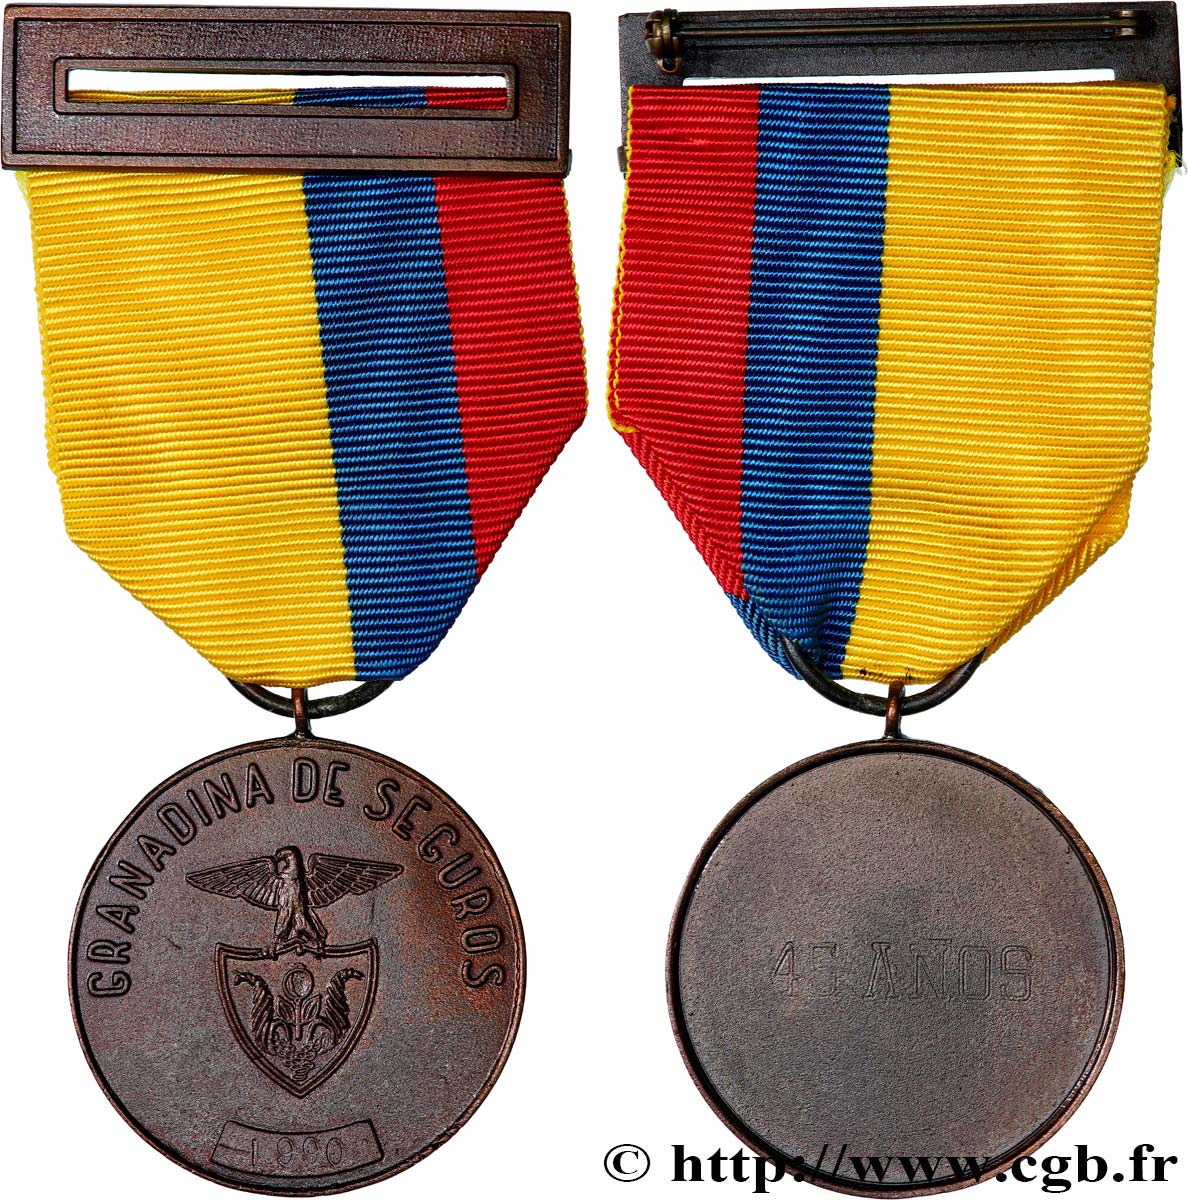 LES ASSURANCES Médaille, Granadina de seguros VZ